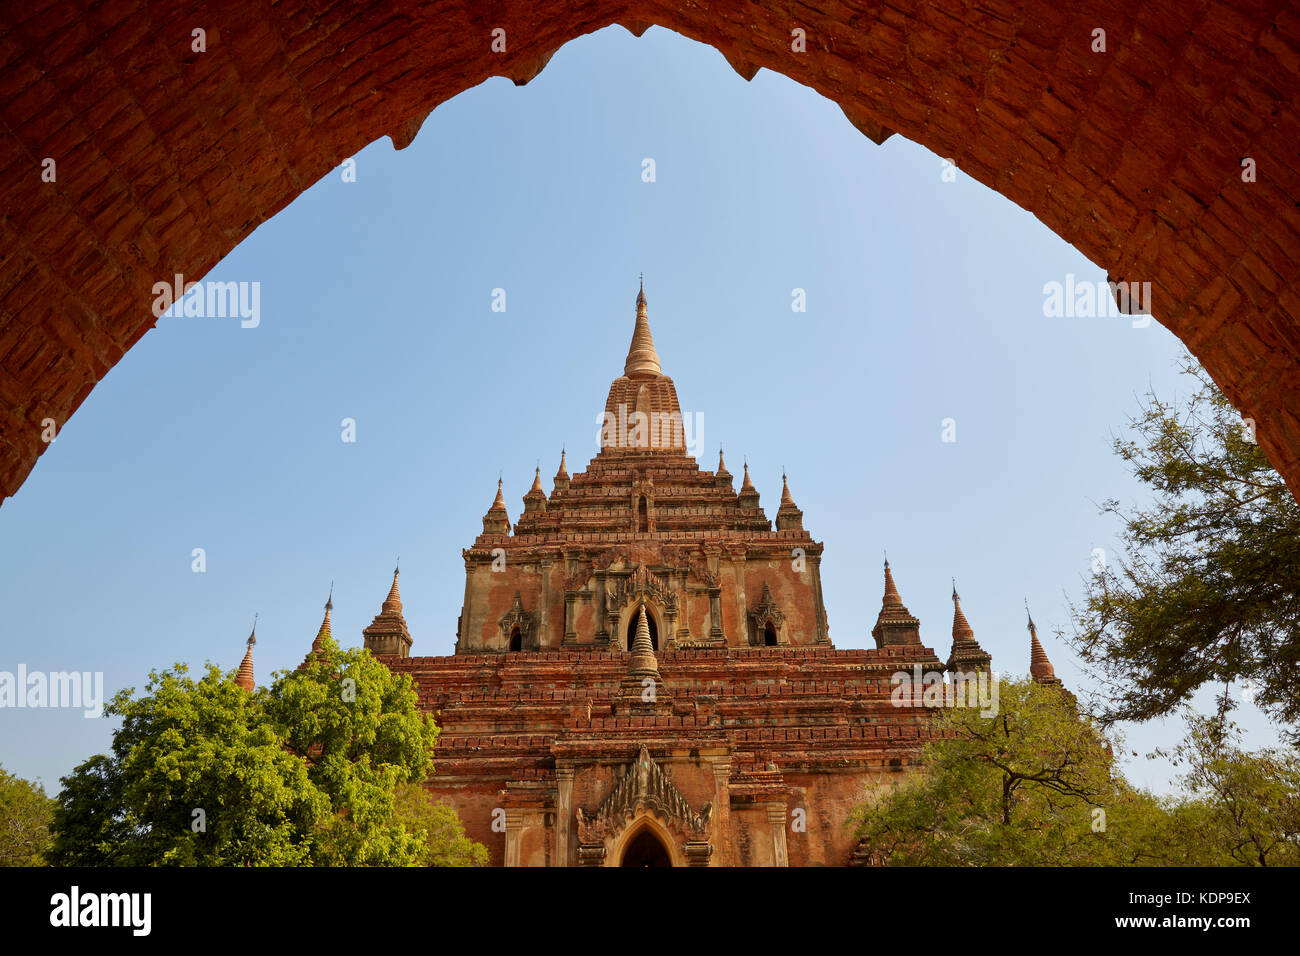 Sulamani Temple, Bagan (Pagan), Myanmar (Burma), Southeast Asia Stock Photo